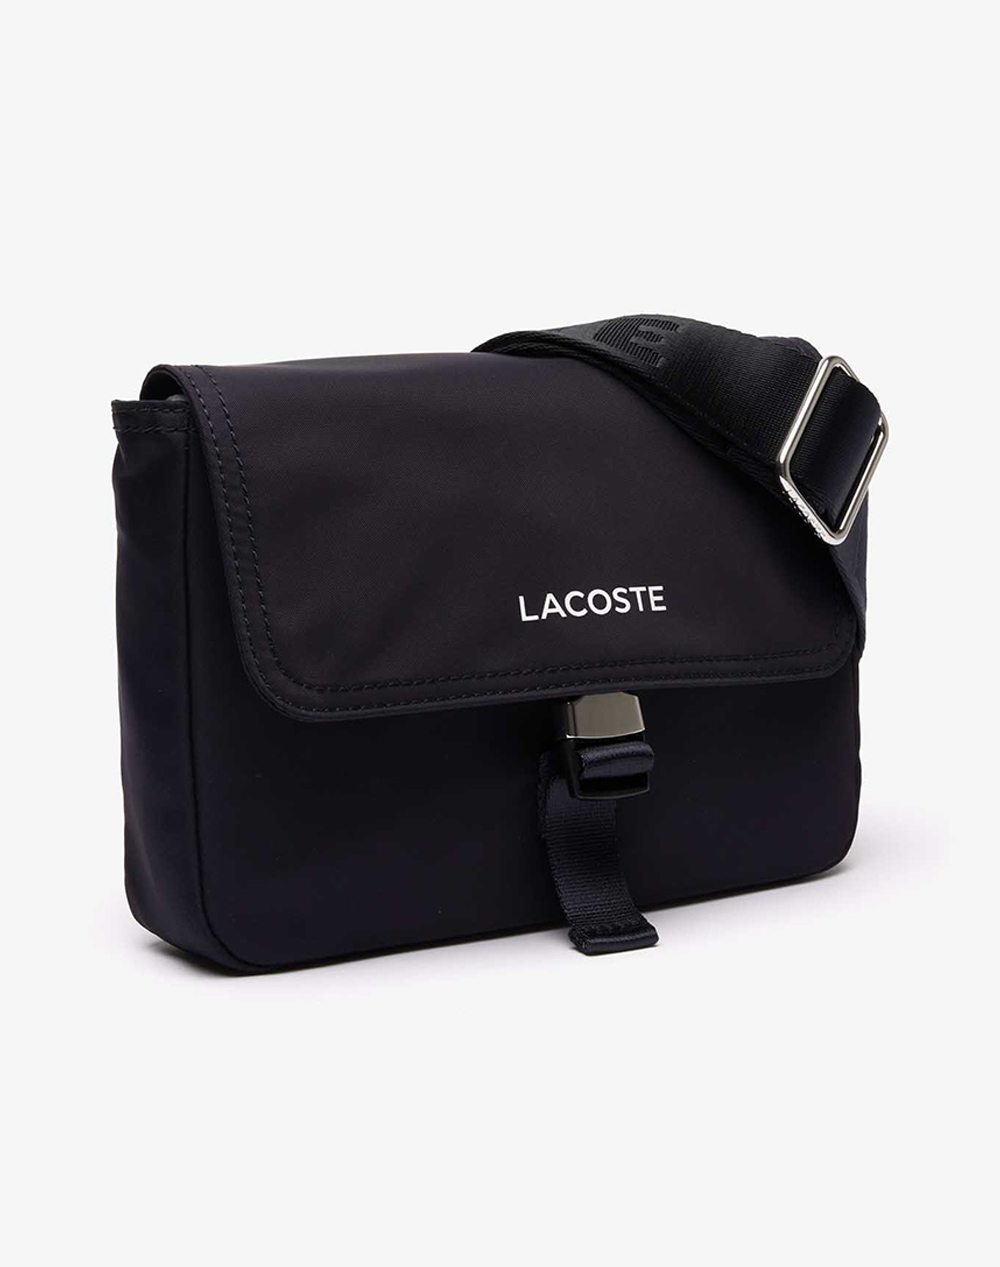 LACOSTE CROSSOVER BAG (Dimensions: 20 x 15.5 x 4 cm) - DarkBlue